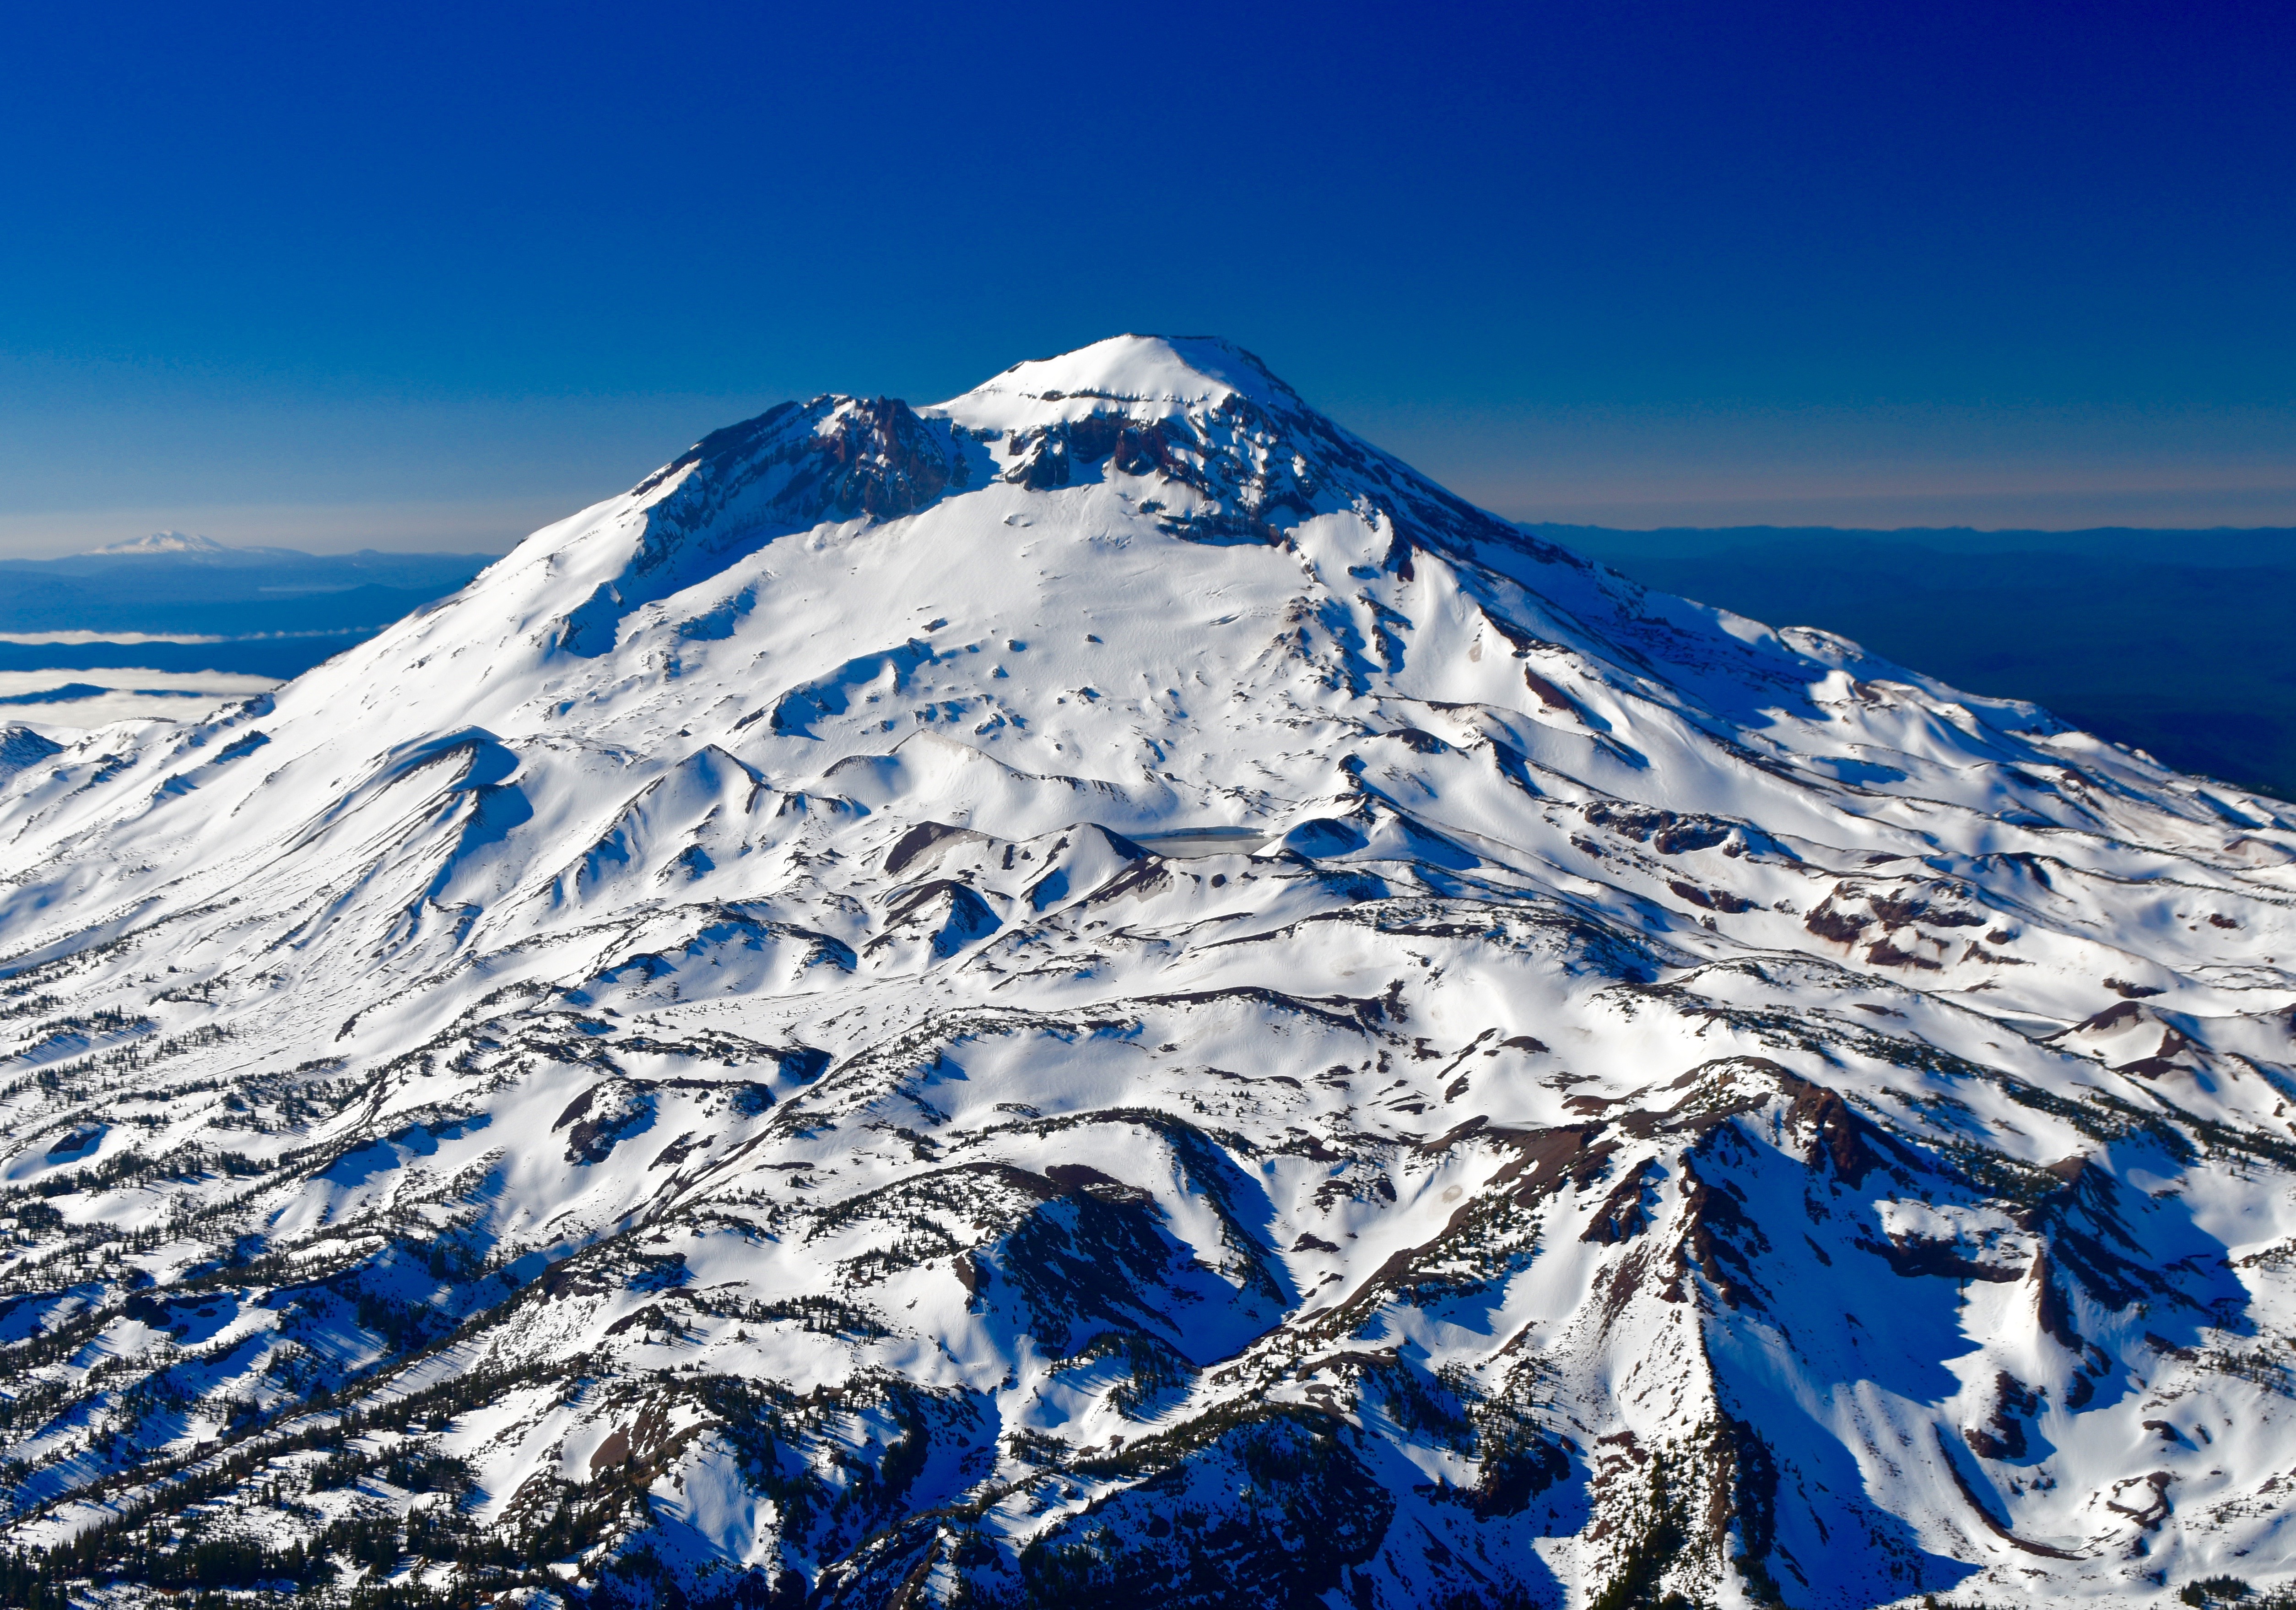 Mount Bachelor 2, Big Mountain Heli Tours